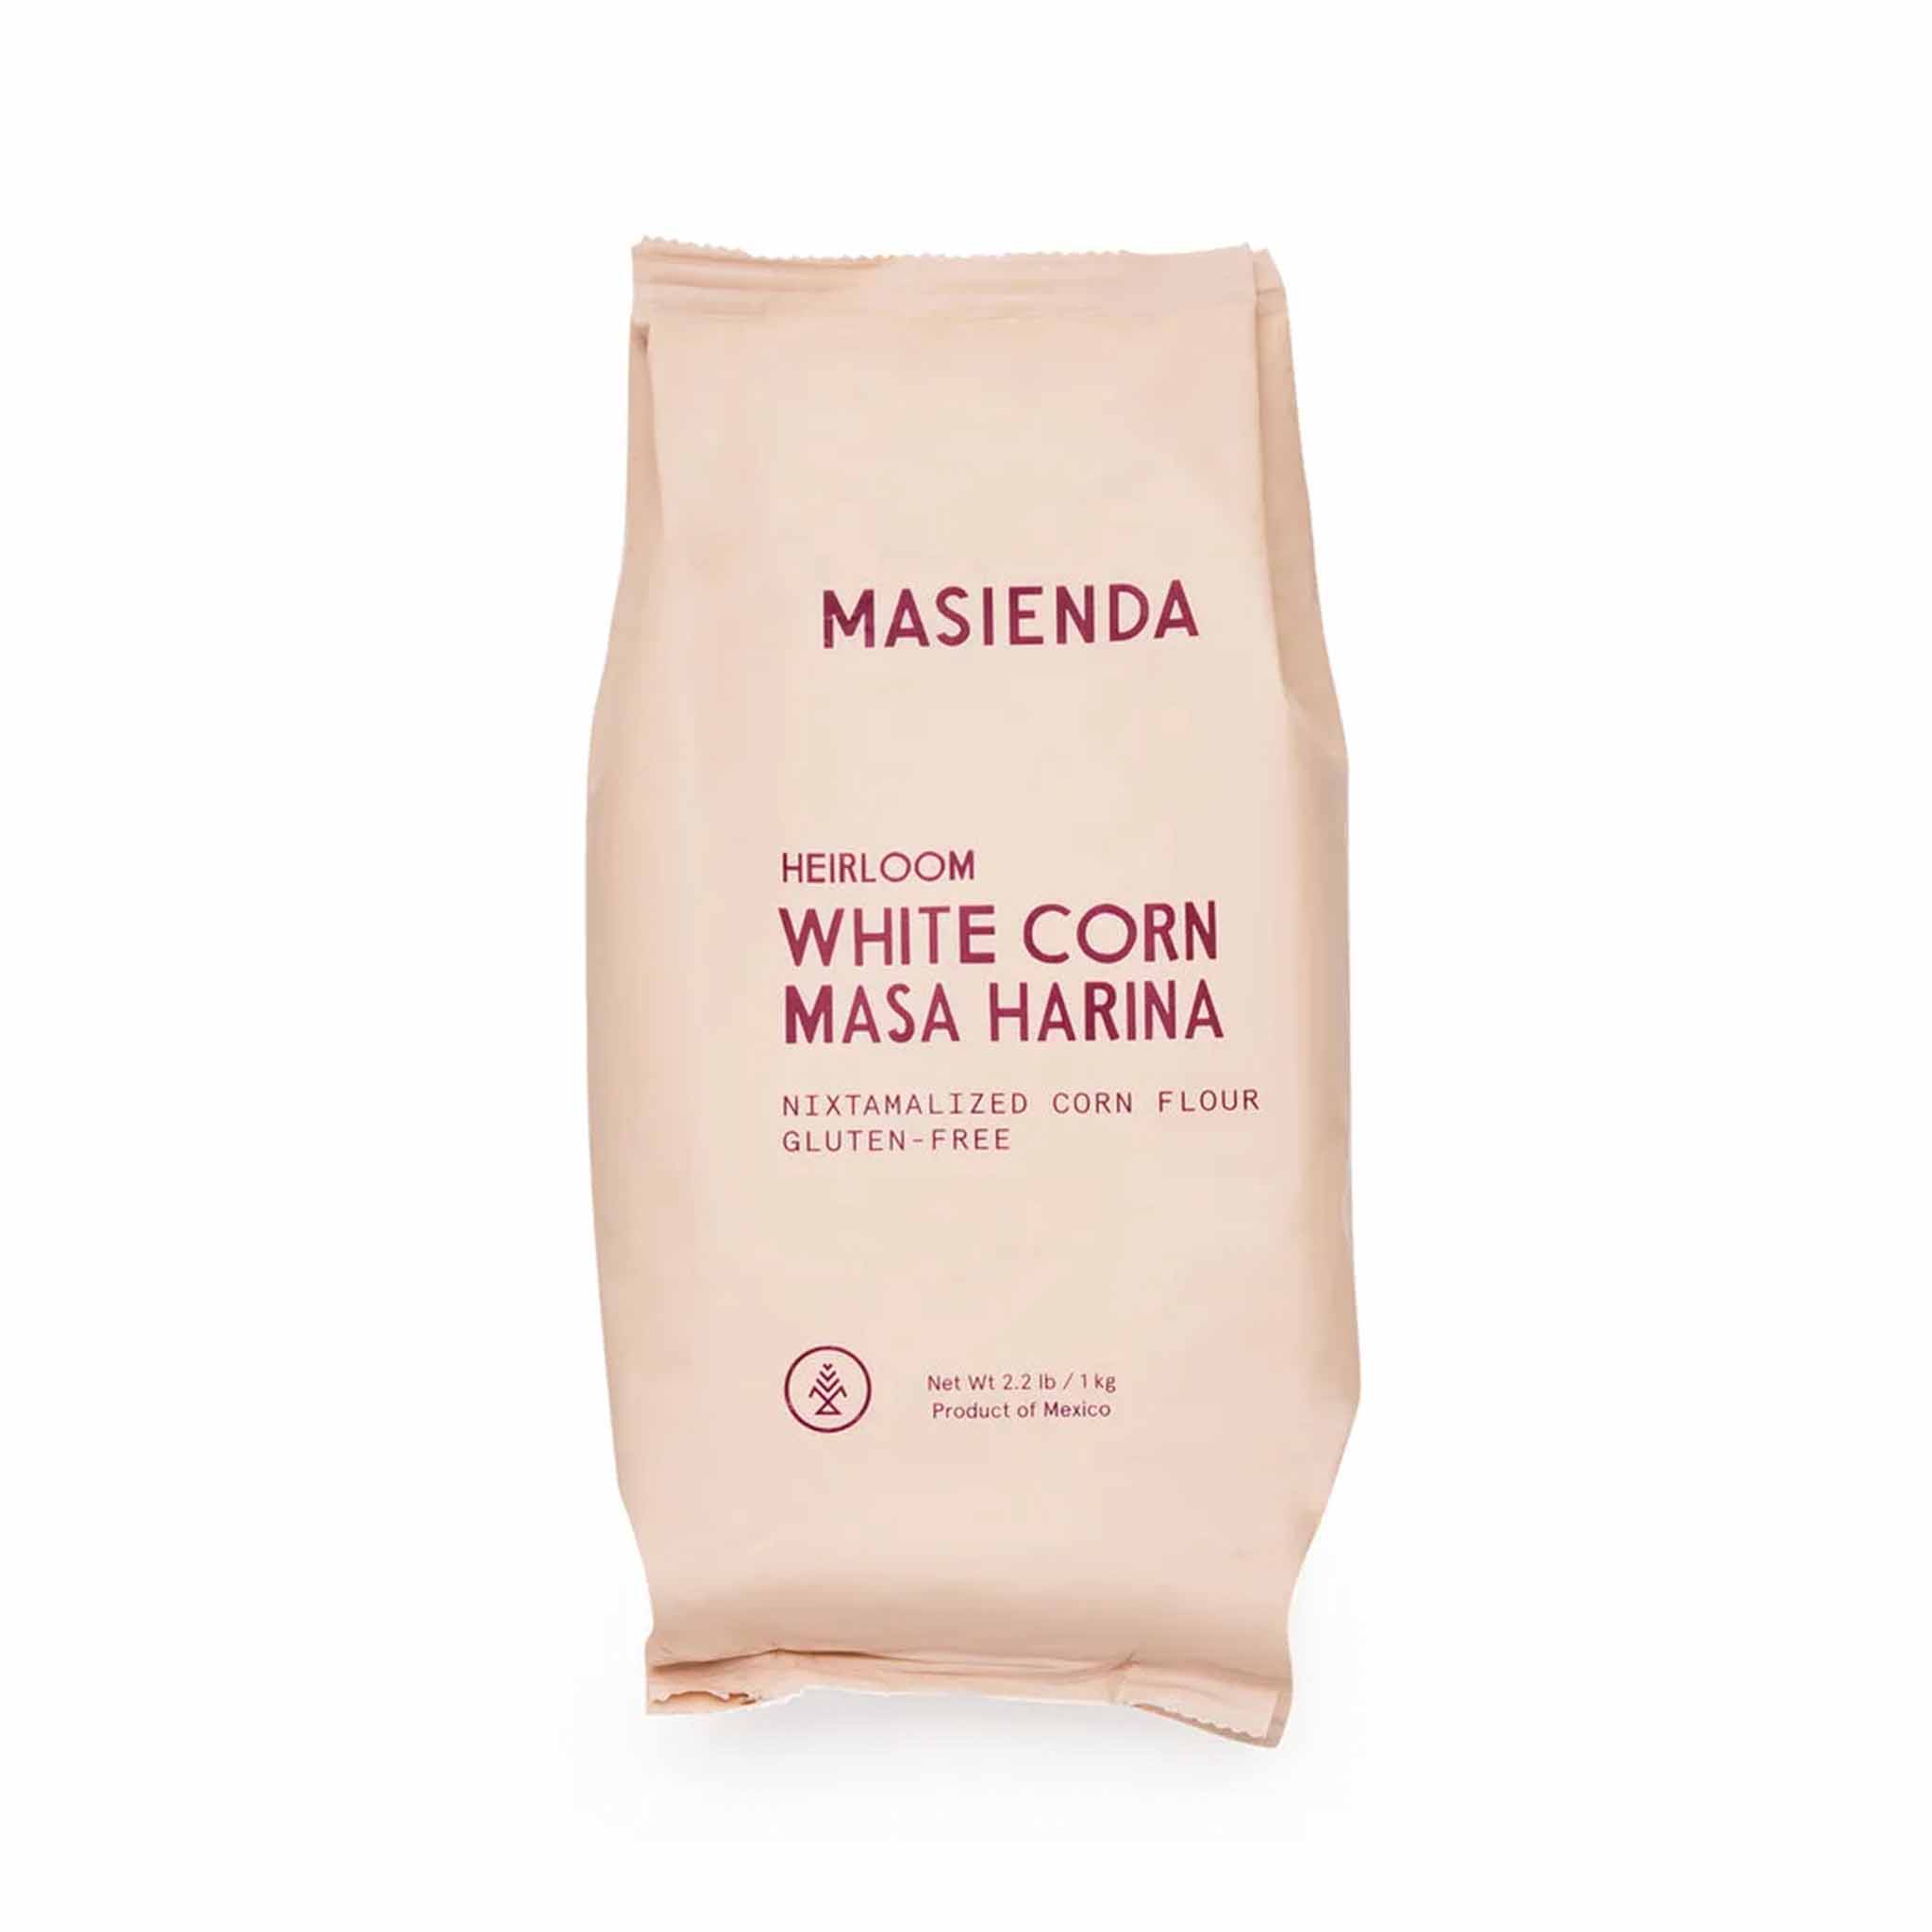 Heirloom White Corn Masa Harina Gluten Free